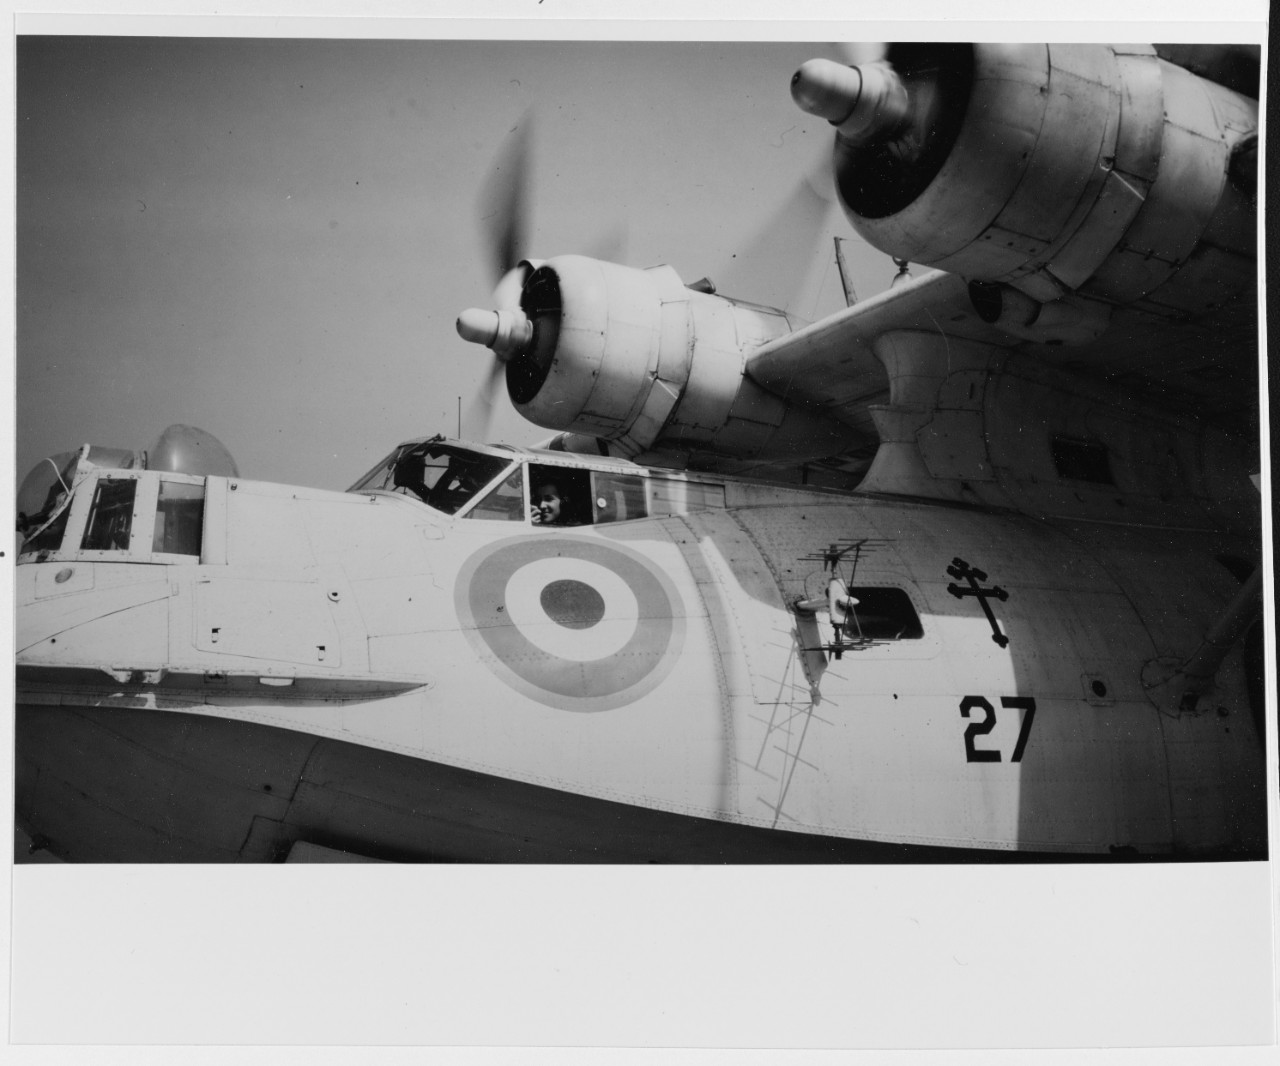 French Navy PBY-5A "Catalina" patrol bomber